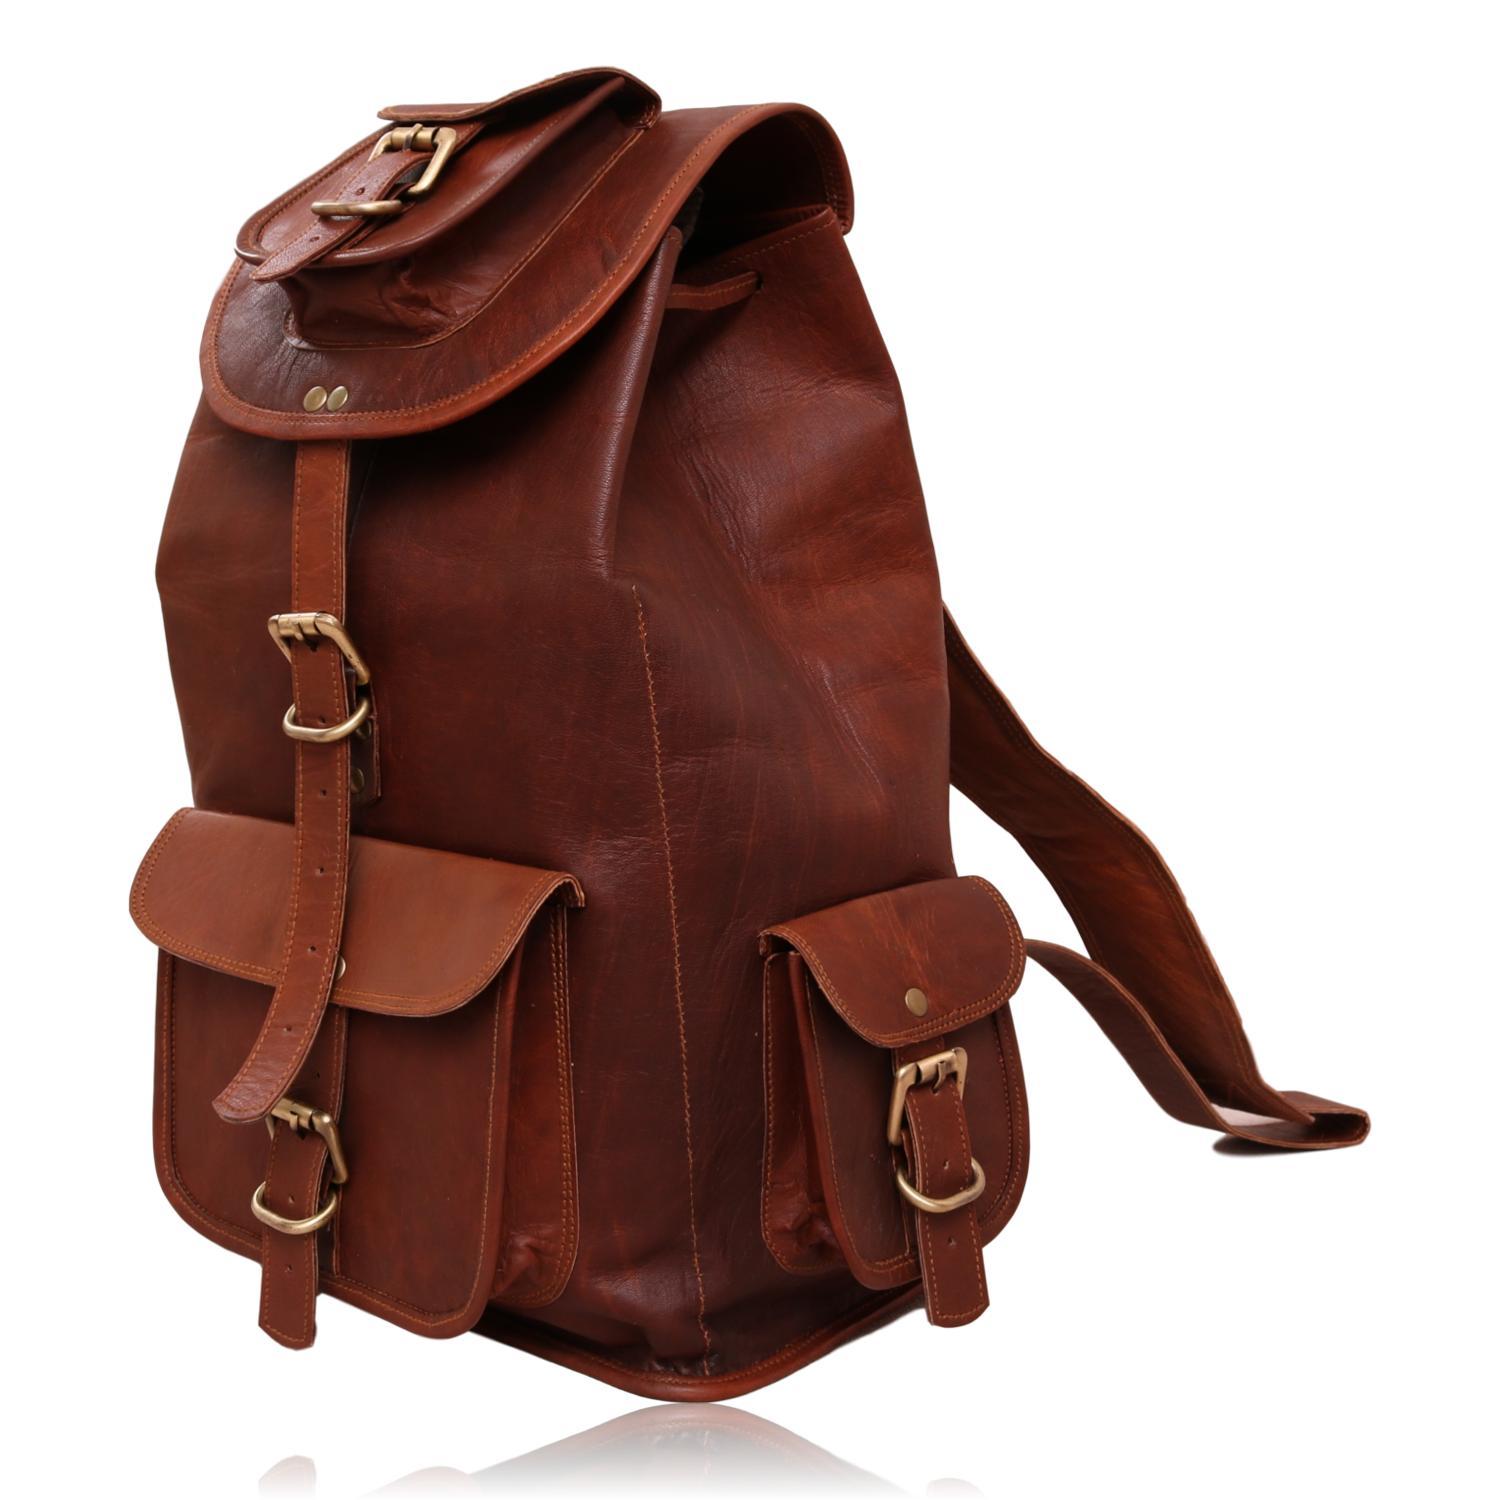 The Explorer Leather Rucksack Backpack